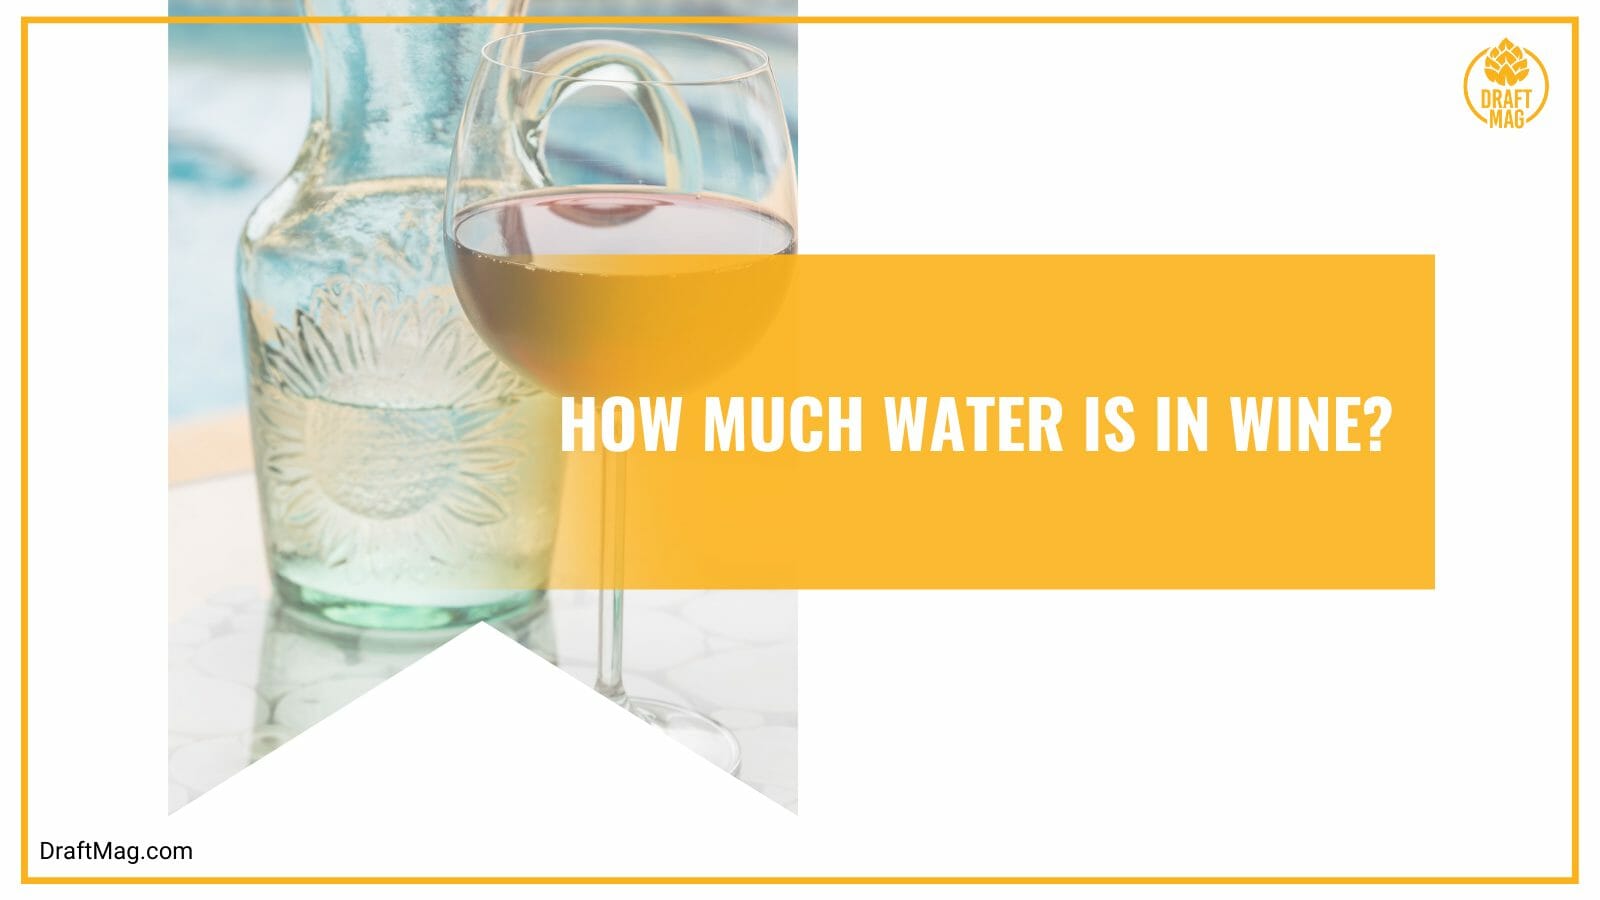 Water in wine